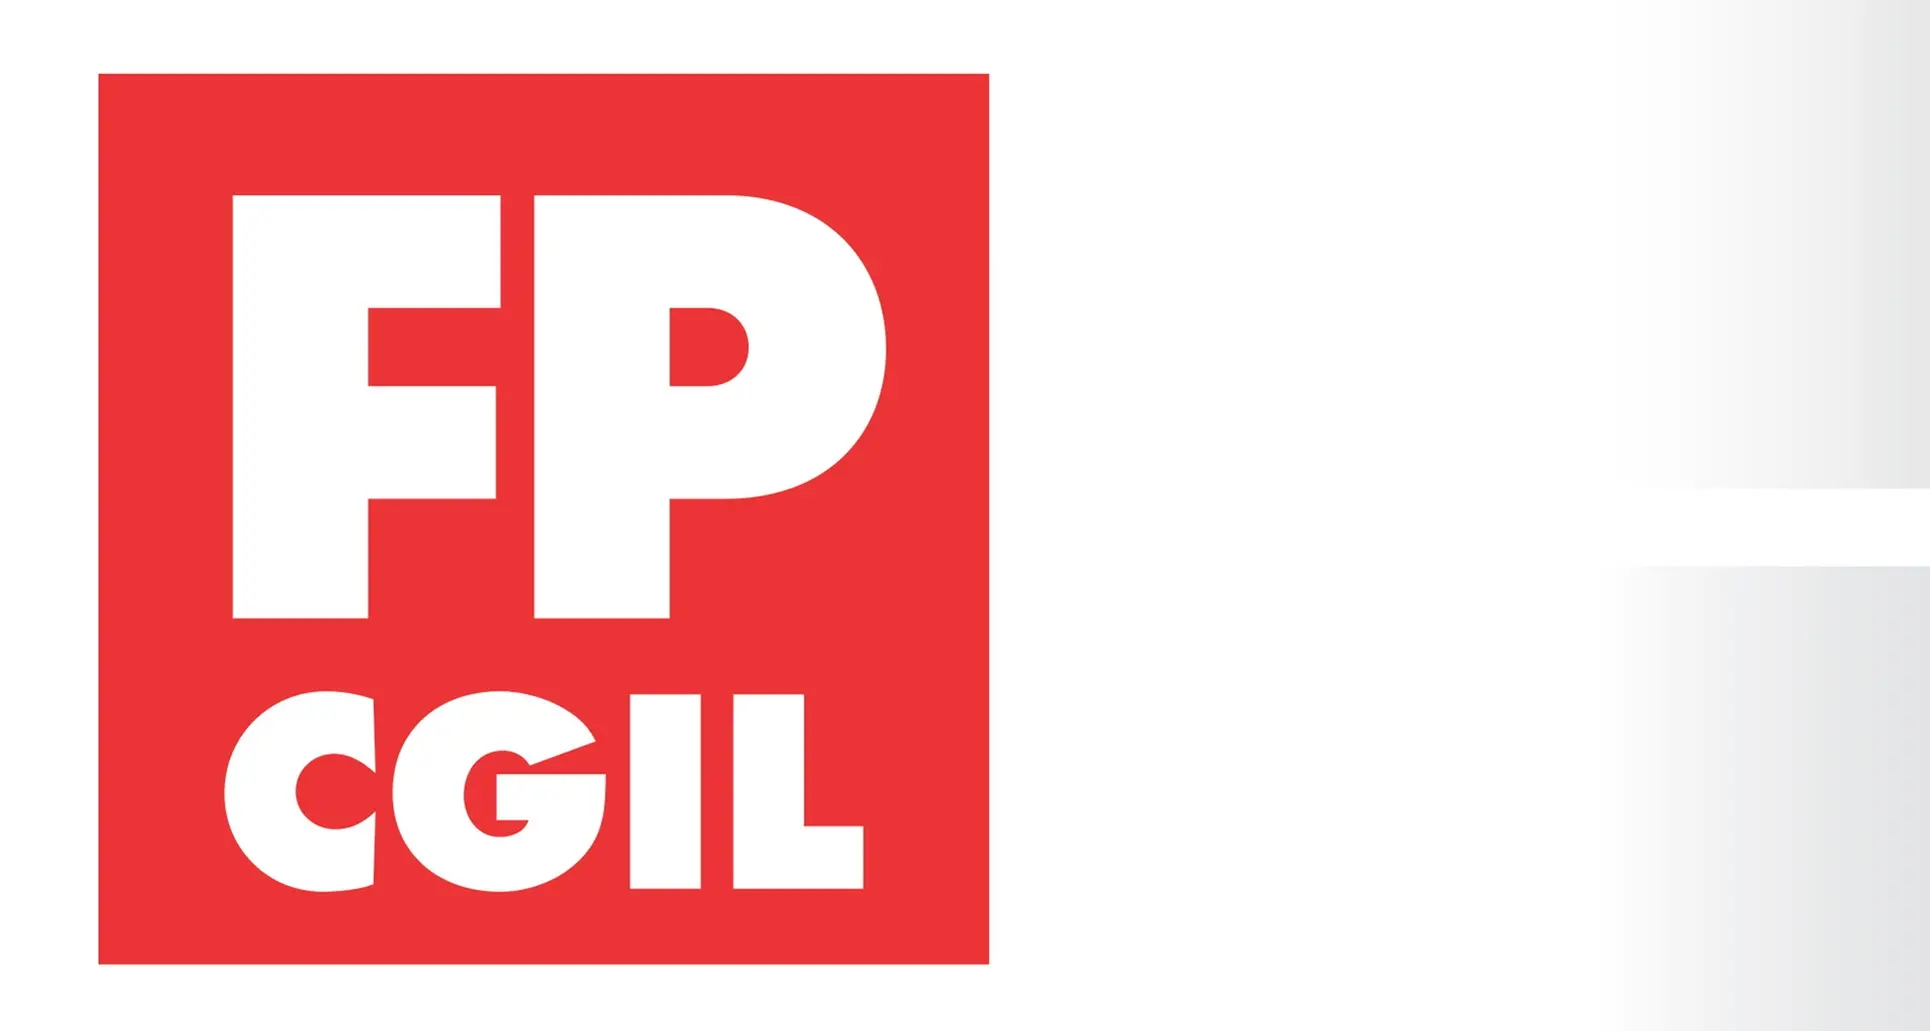 FP CGIL, Funzione Pubblica